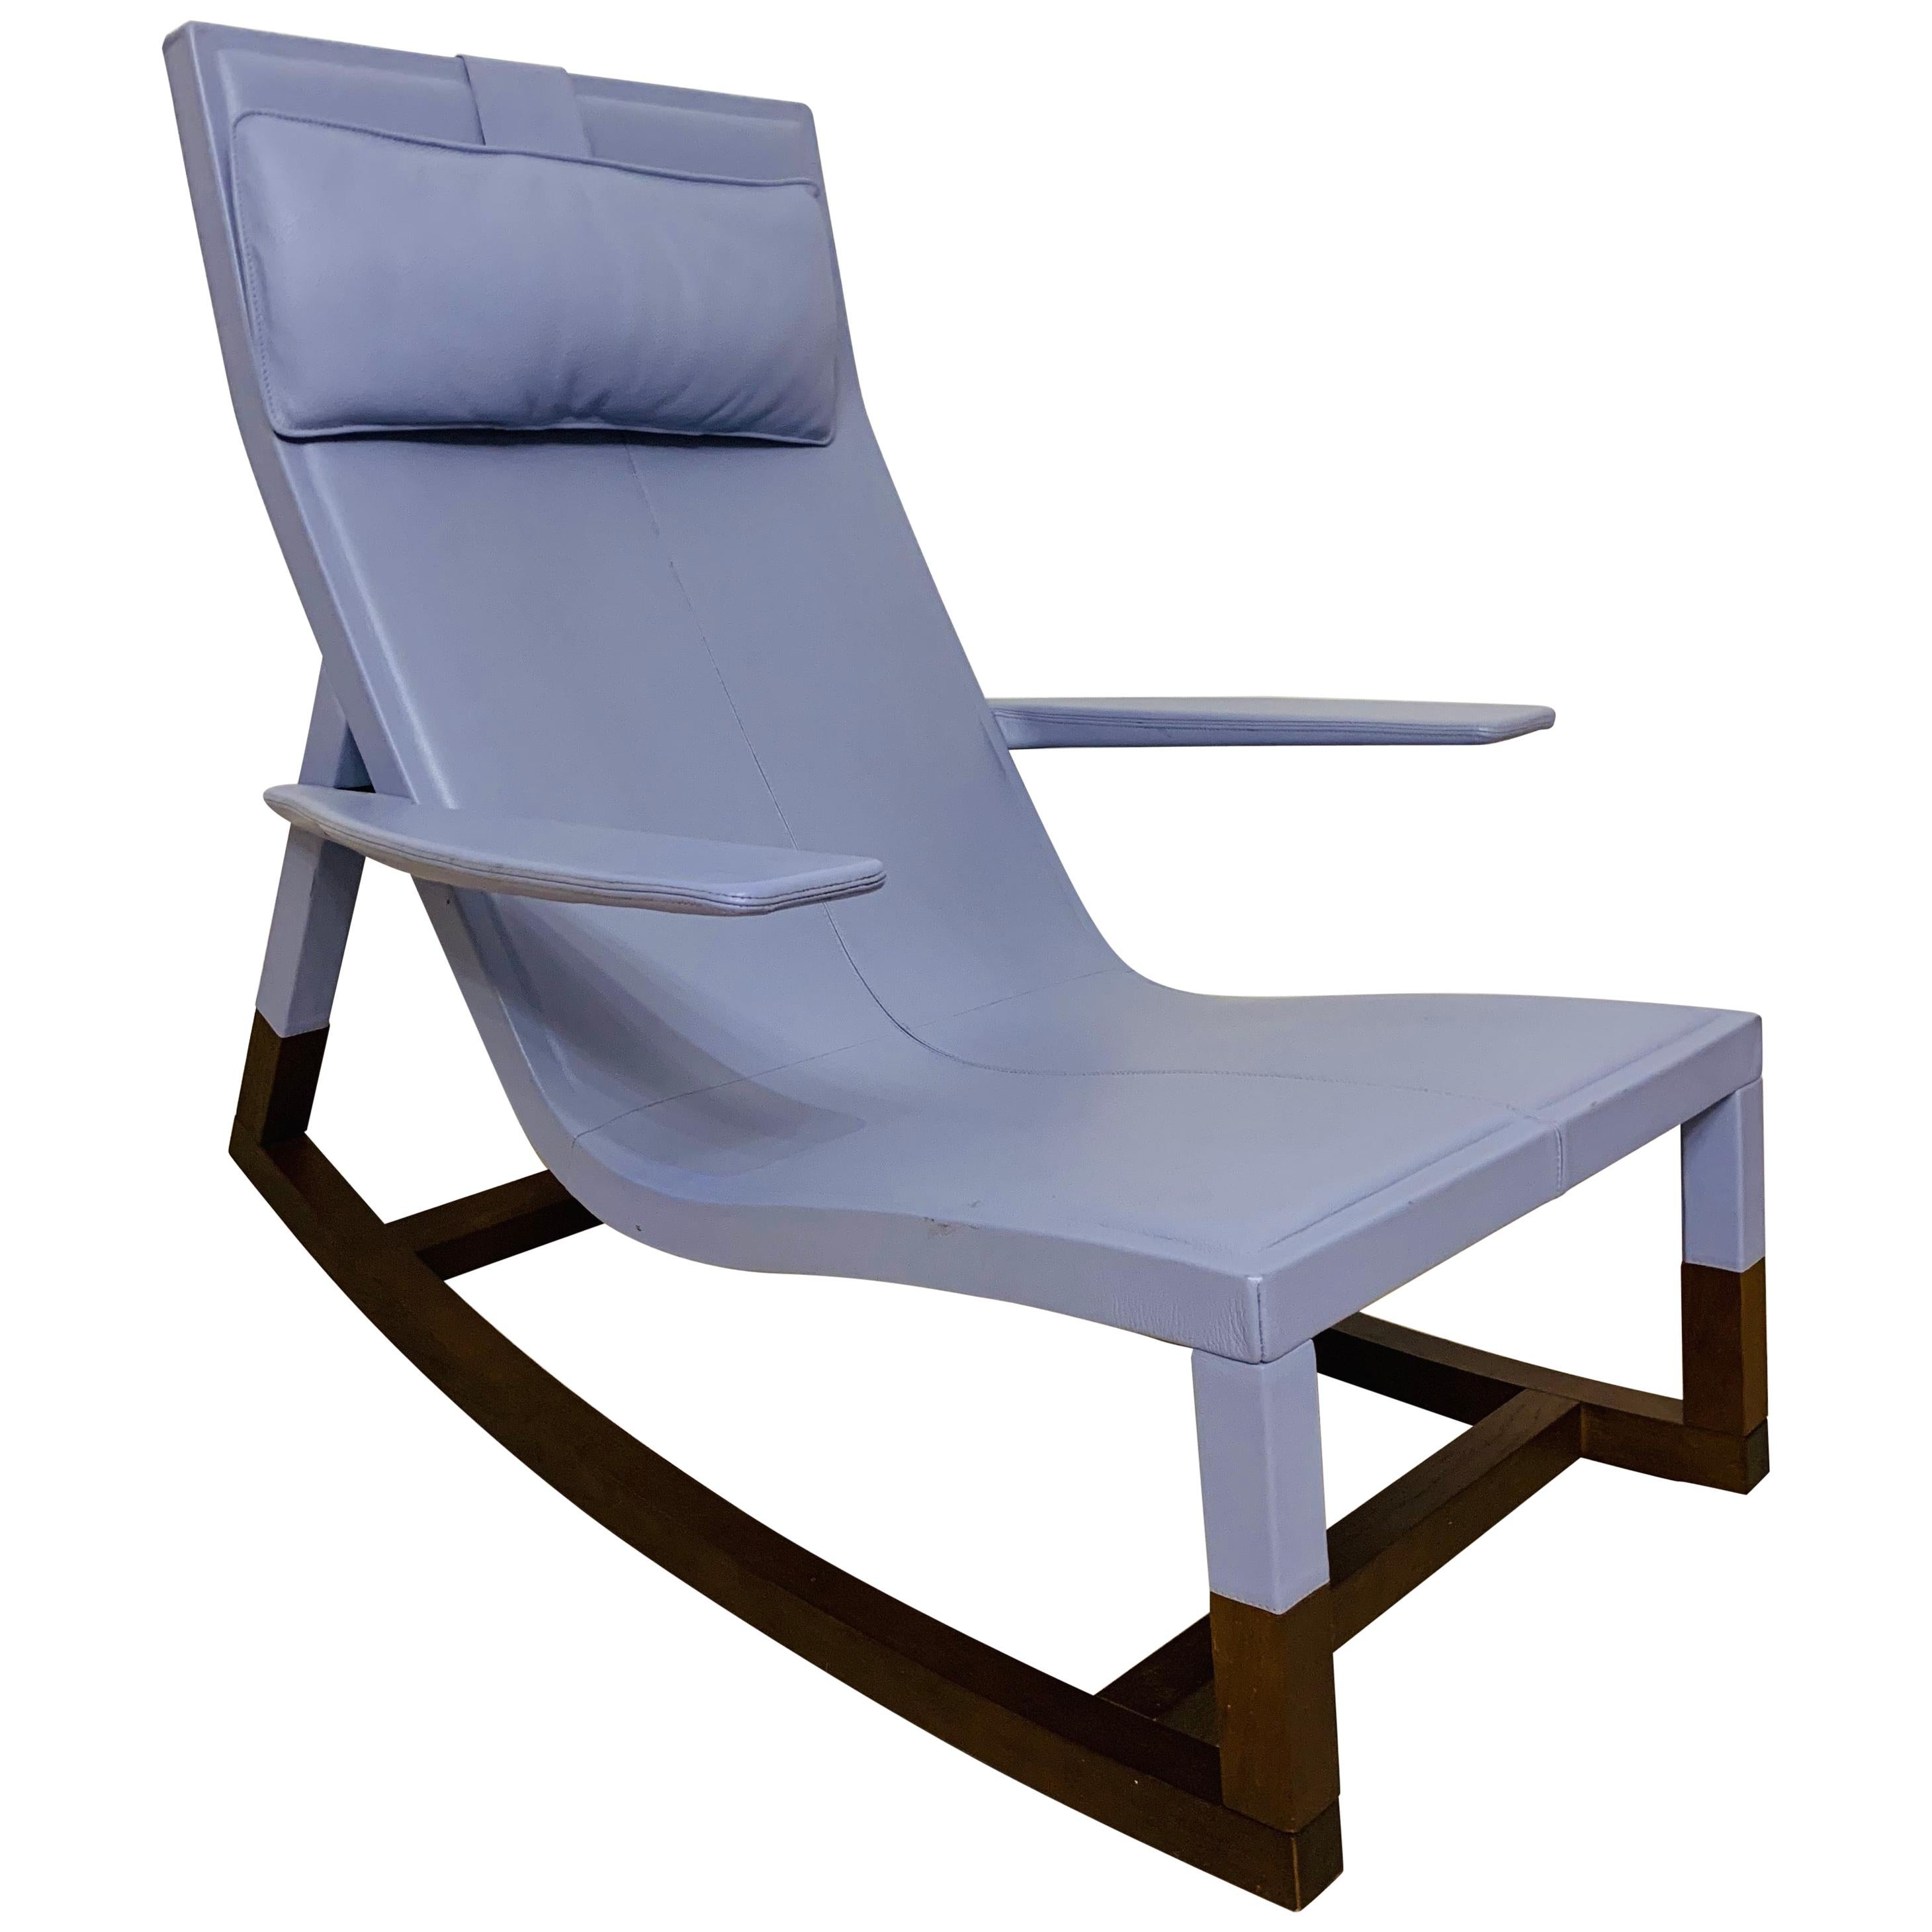 exclusive original Designer Chair light blue leather Poltrona Frau Don'Do 